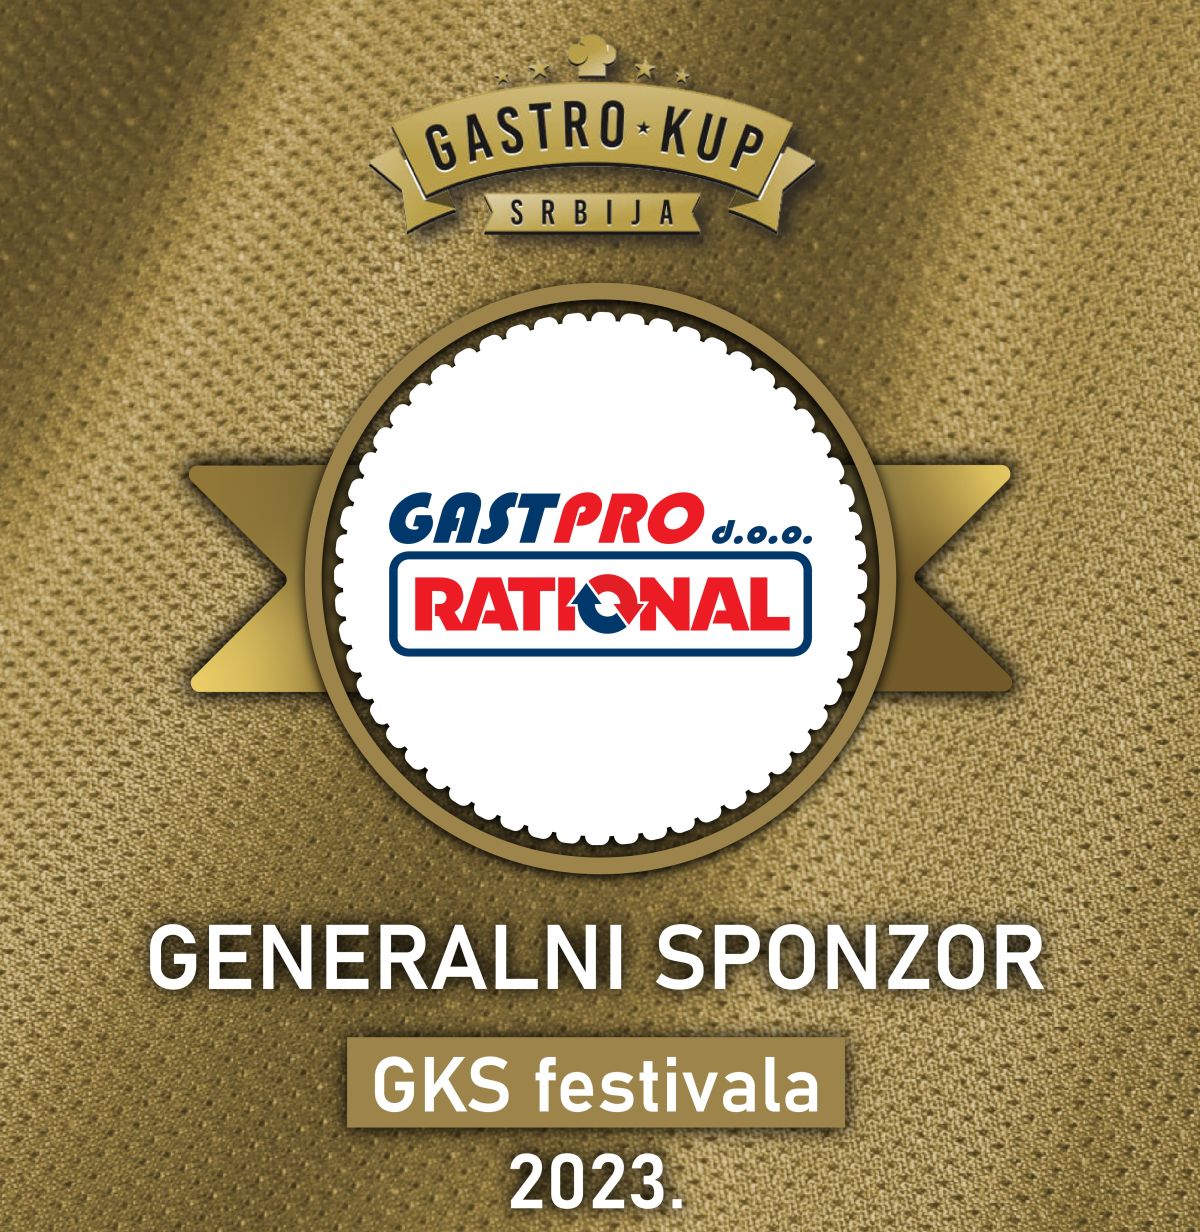 Gastro Kup Srbija 2023 Gast Pro